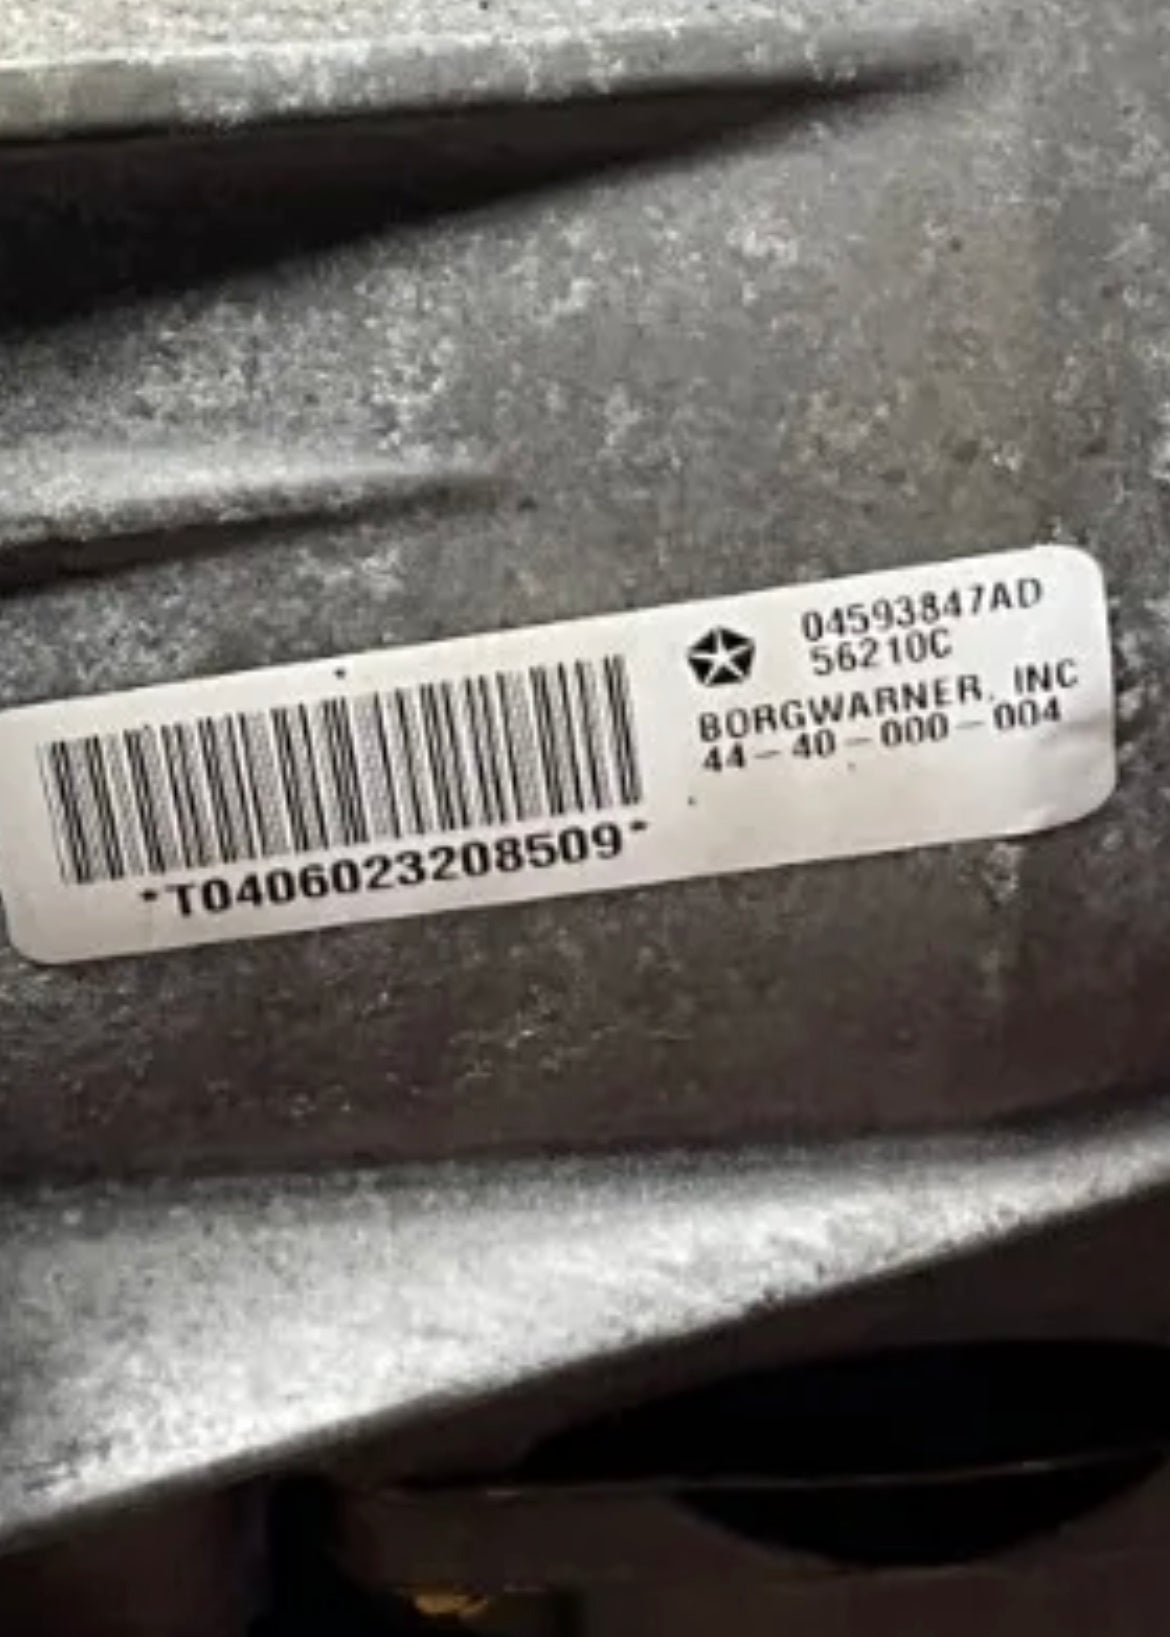 REBUILD/UPGRADE 2009-2014 Dodge Charger/Chrysler 300 5.7L V8 Transfer Case Performance Upgrade. TRANSFER CASE MUST BE SHIPPED TO US FOR UPGRADE -Mopar - 4593847ad, 4593847AB, 4593847AC, RL593847AC, RL593847AD